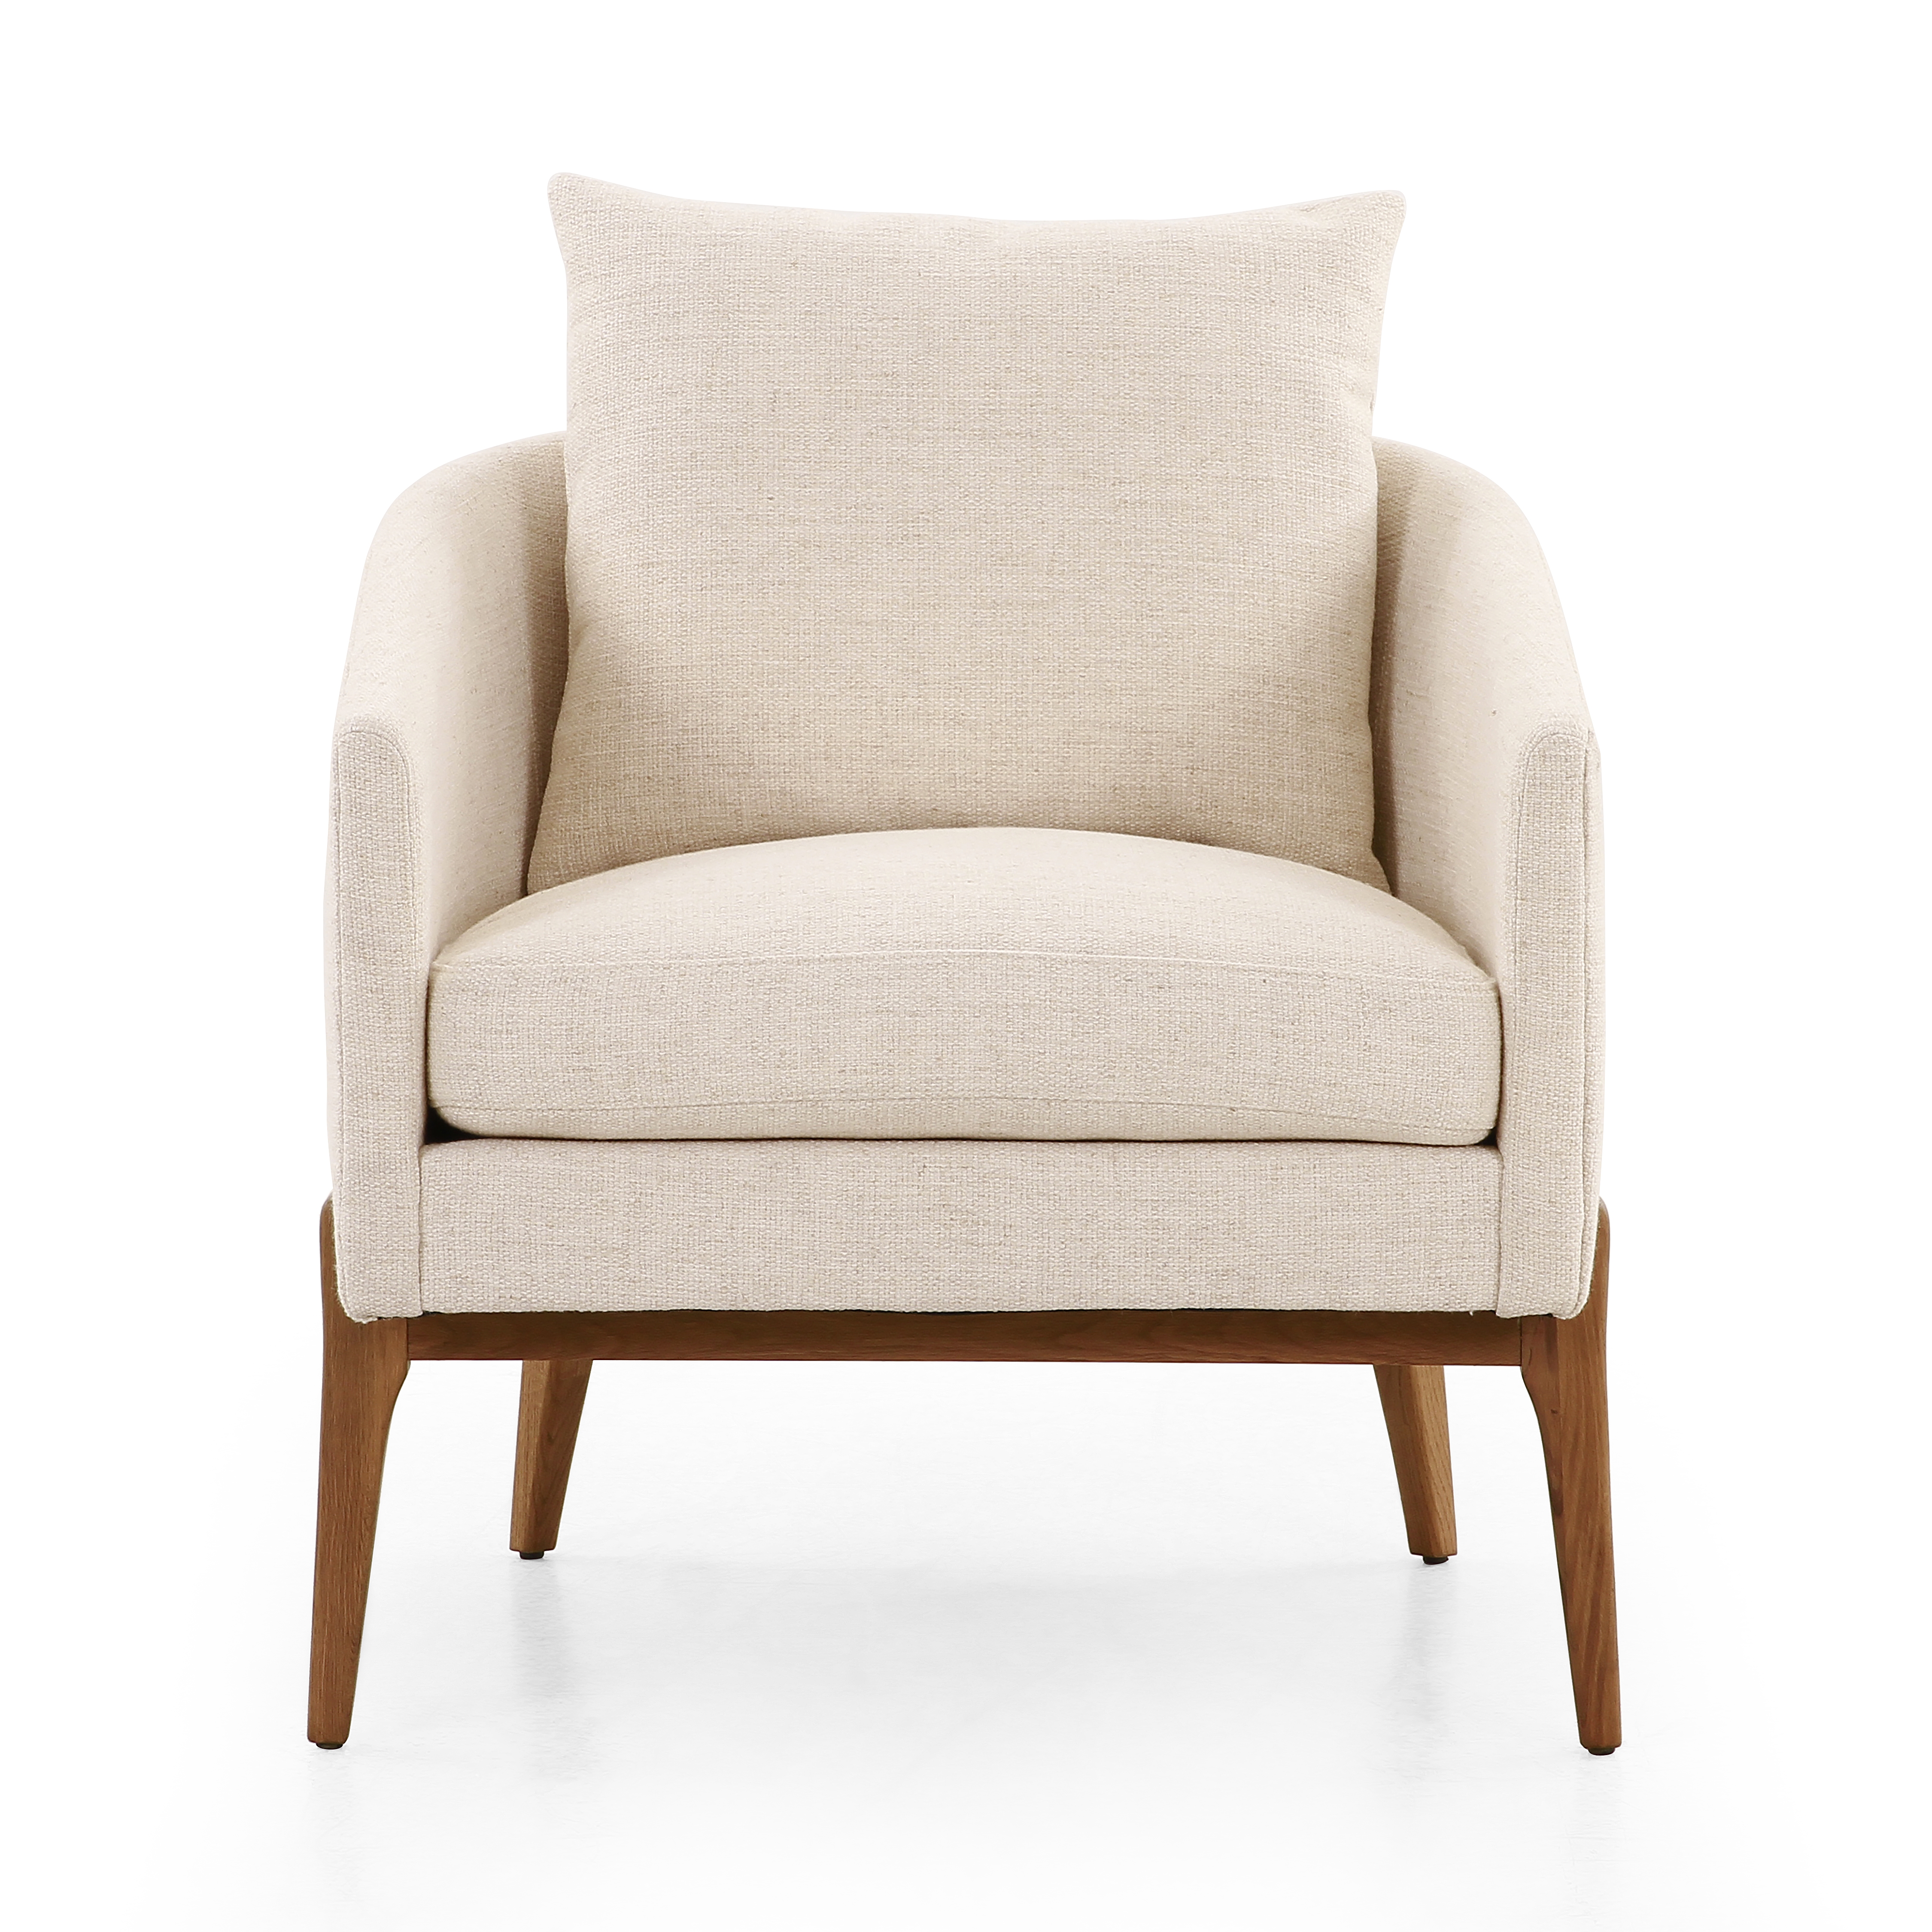 Copeland Chair-Thames Cream - Image 3